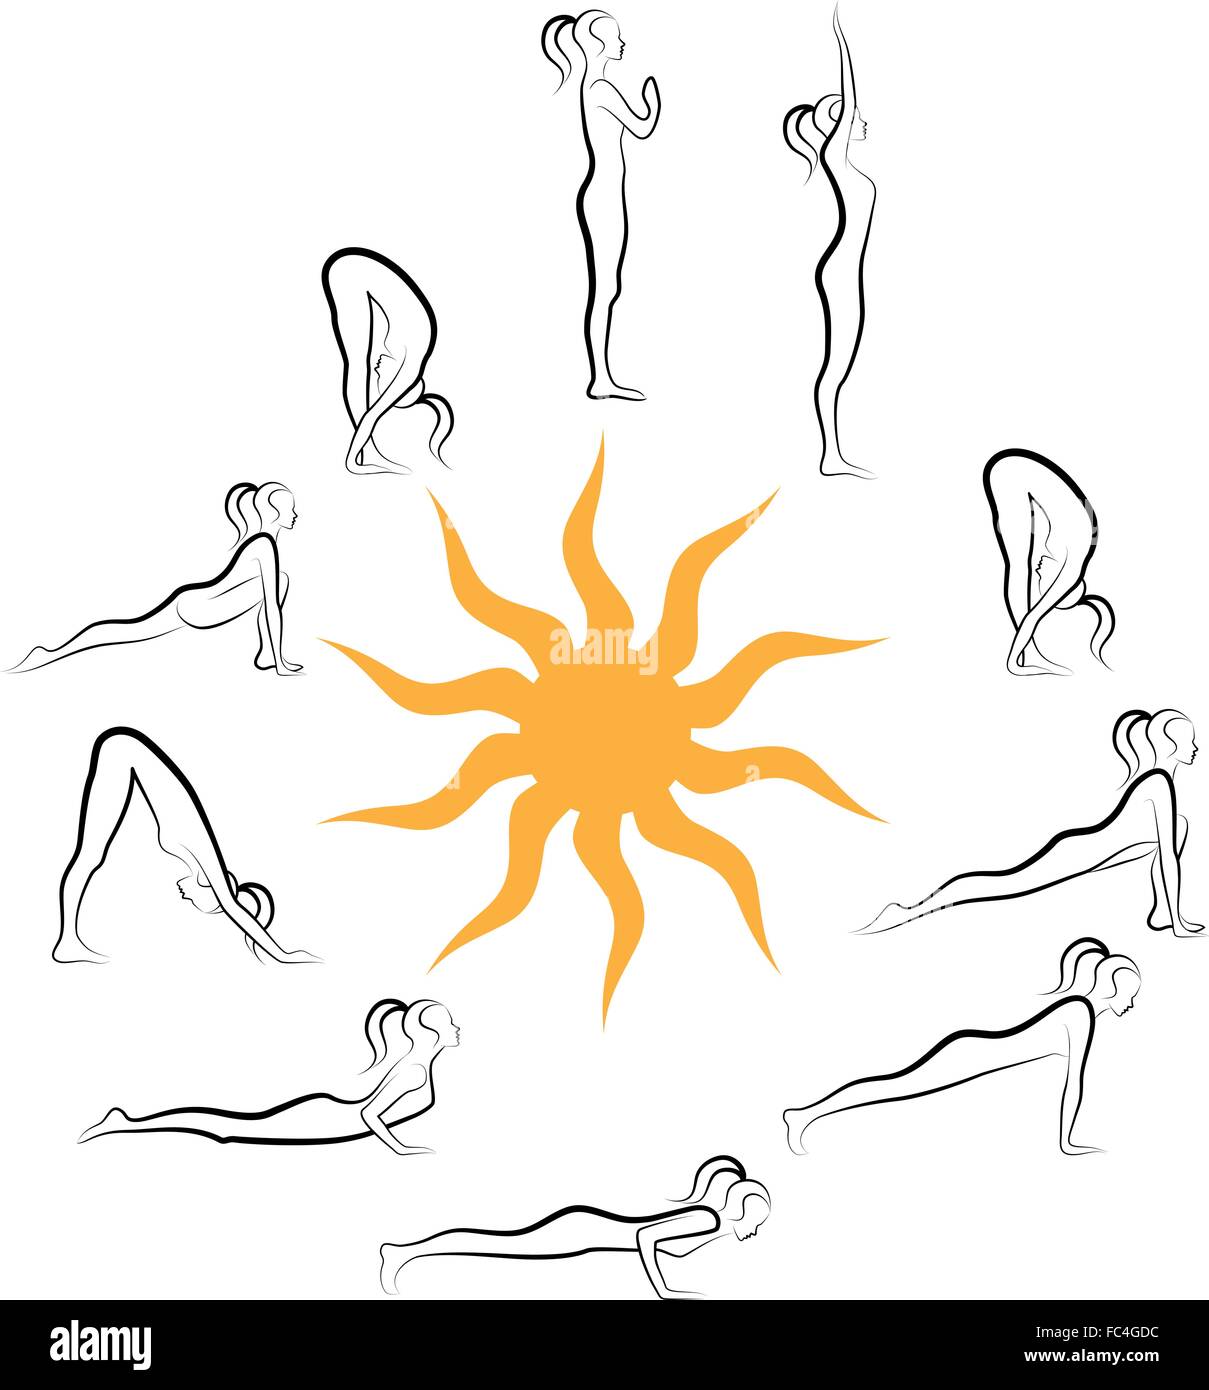 Om Mantra Yoga Symbol Gold Sun Asana Relax Fitness Gift Box